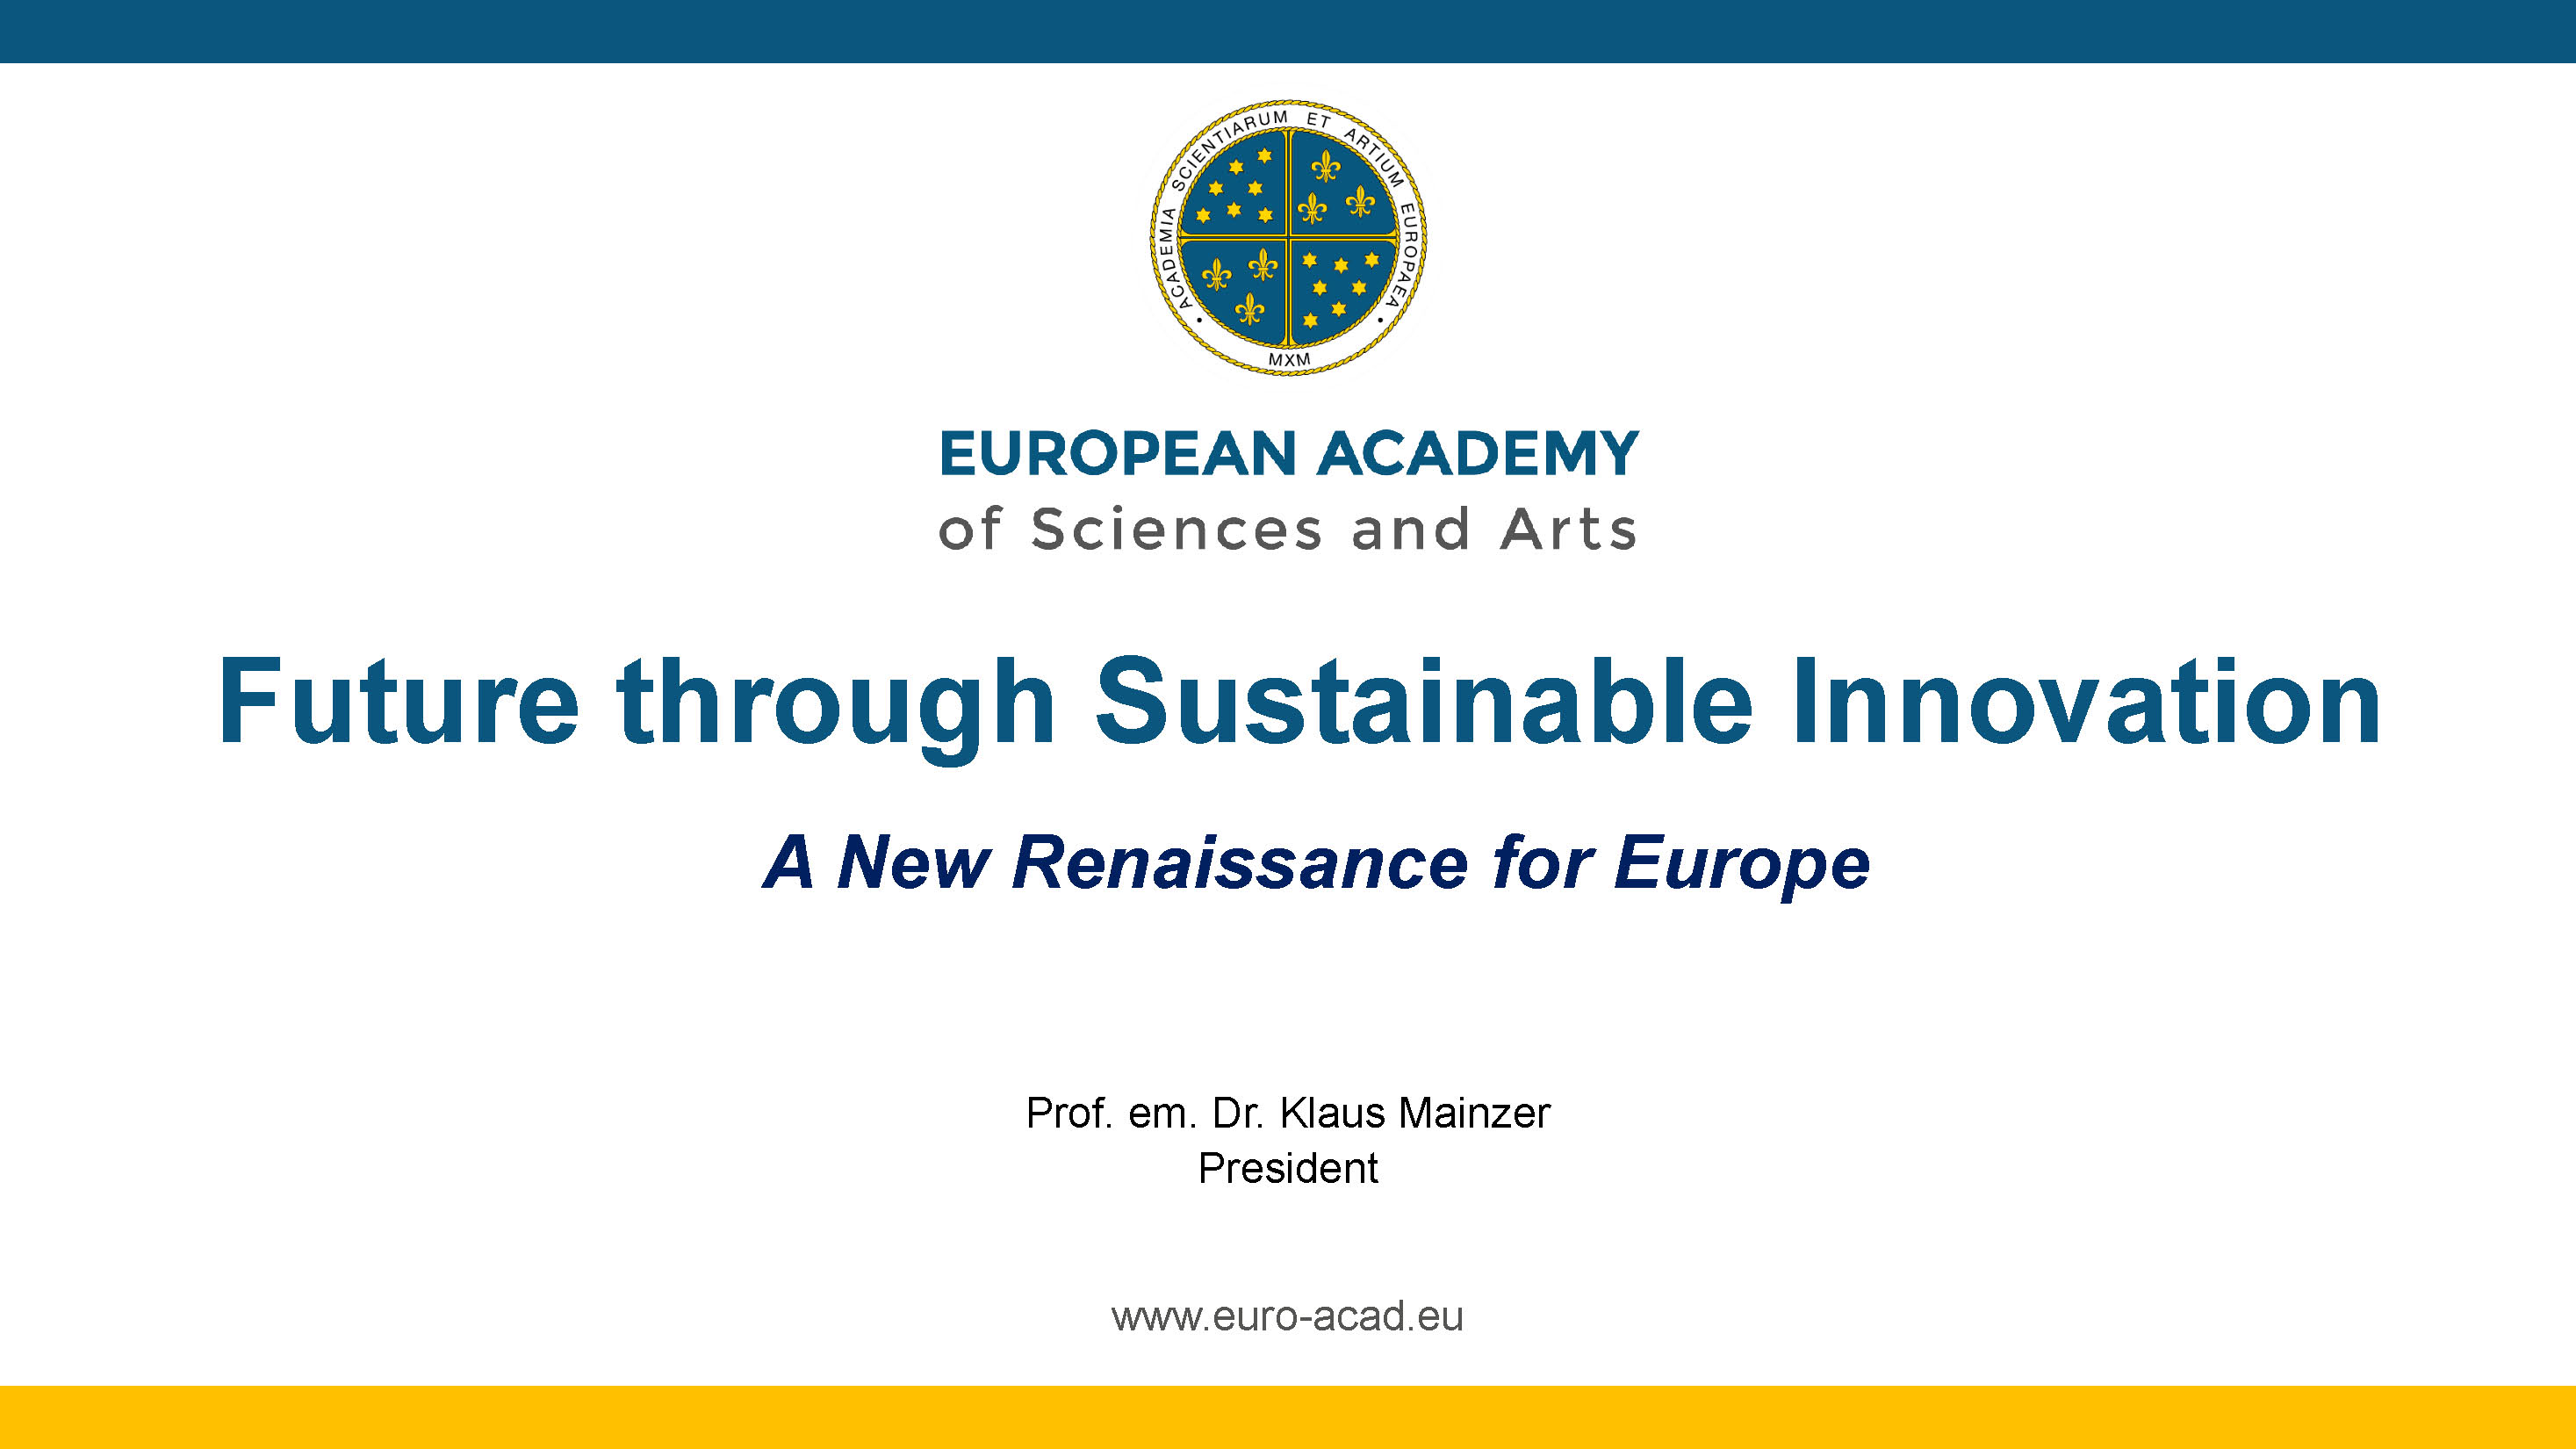 Klaus Mainzer: Future through Sustainable Innovation